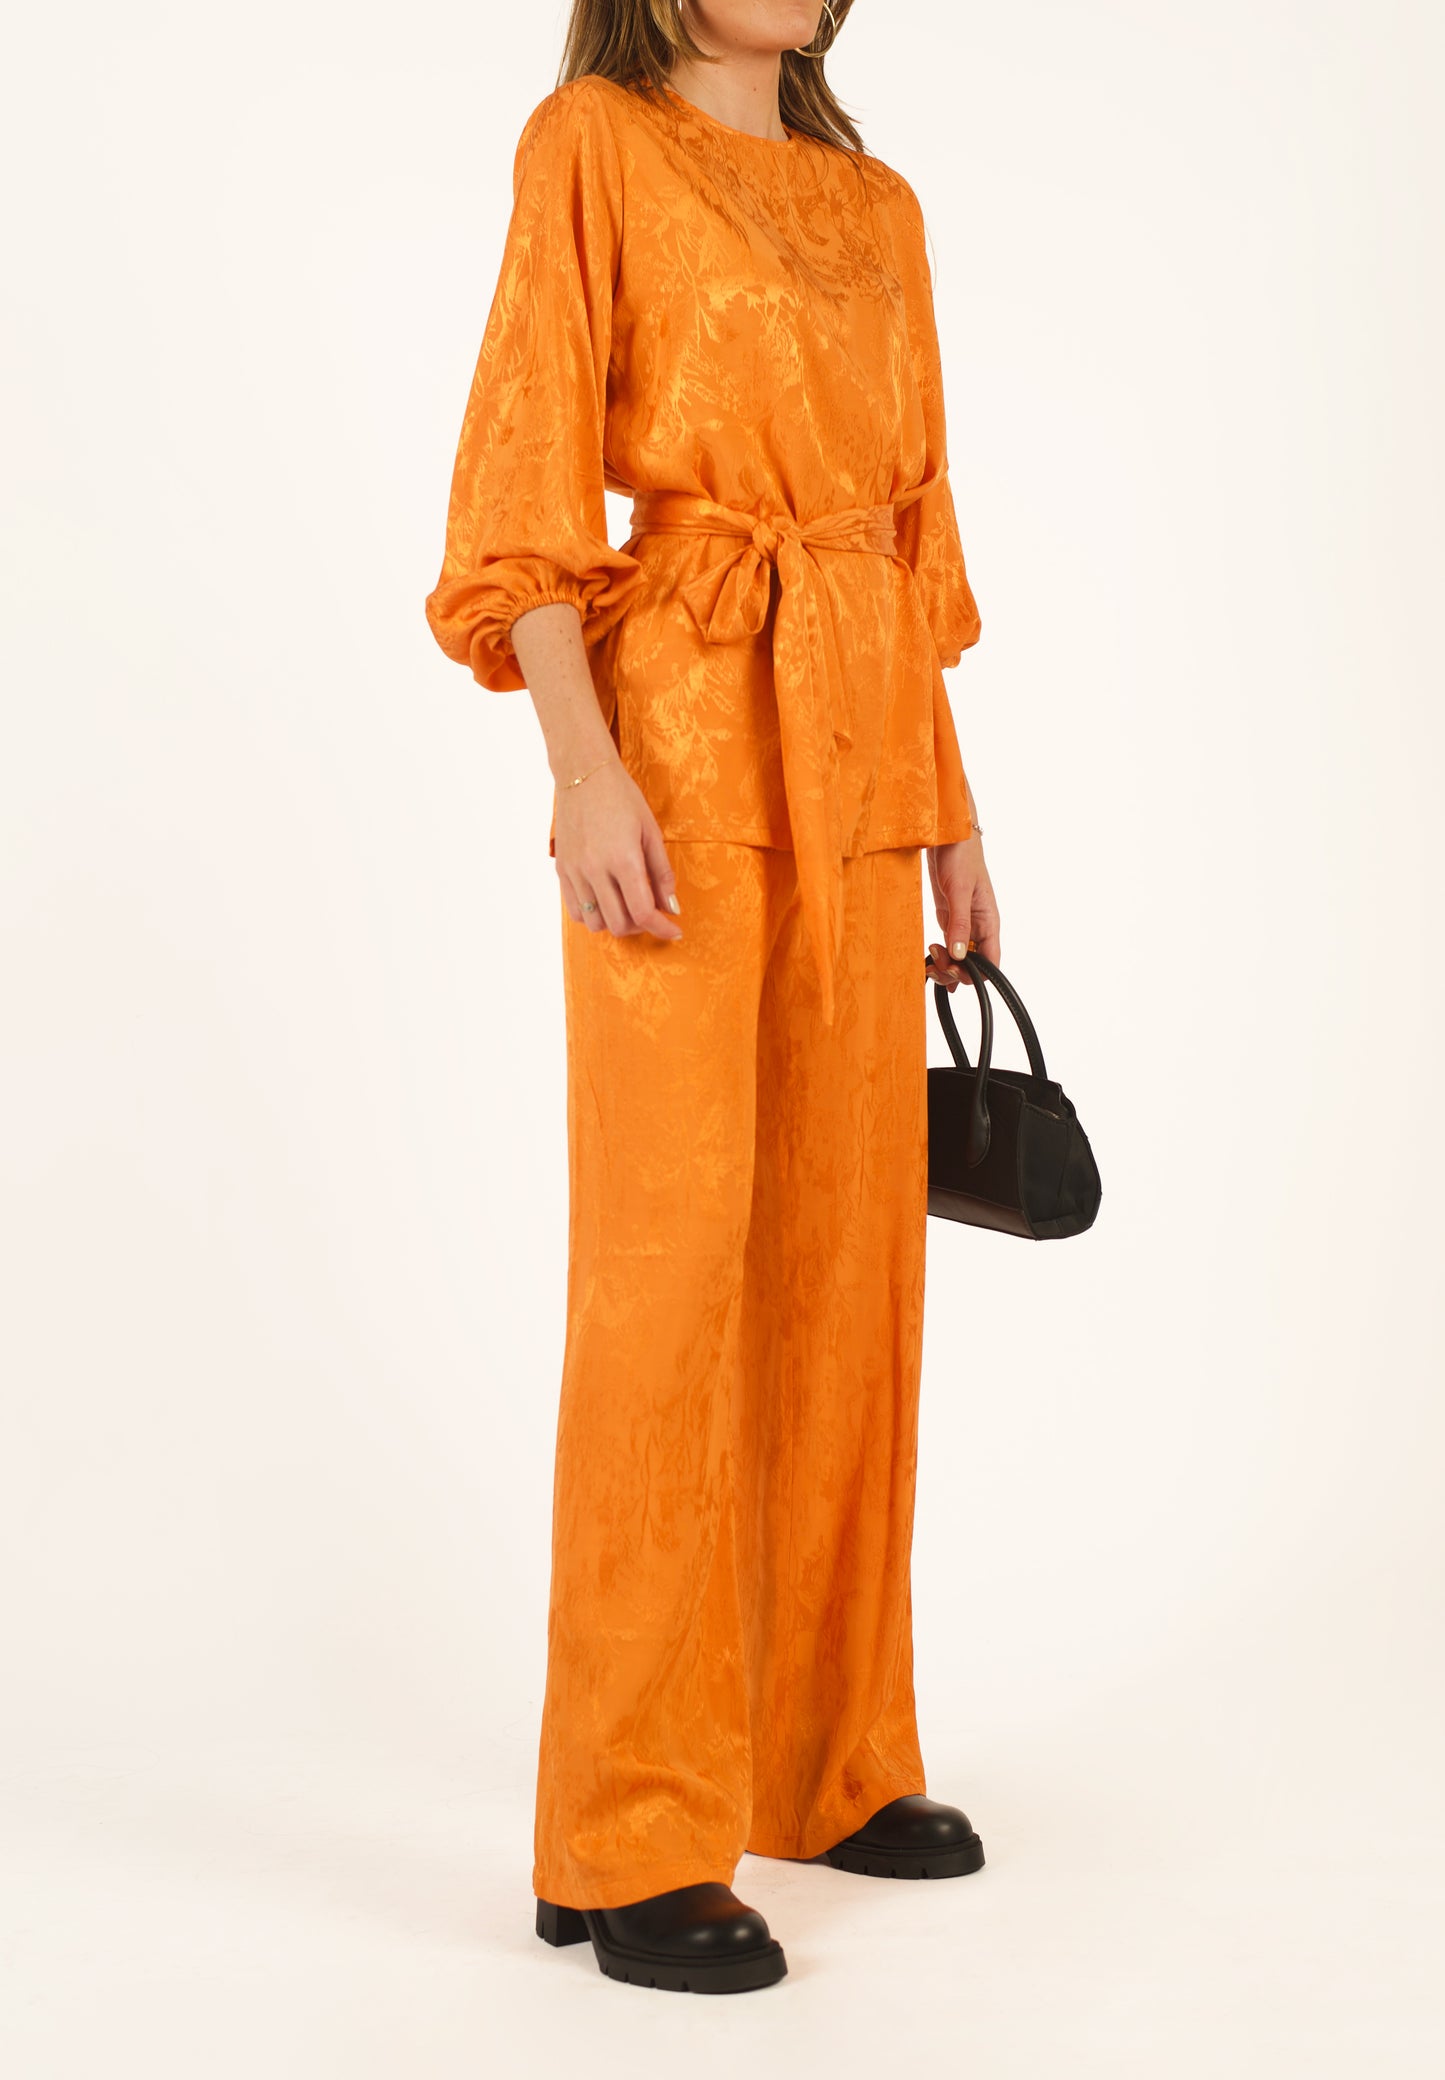 Orange jacquard blouse